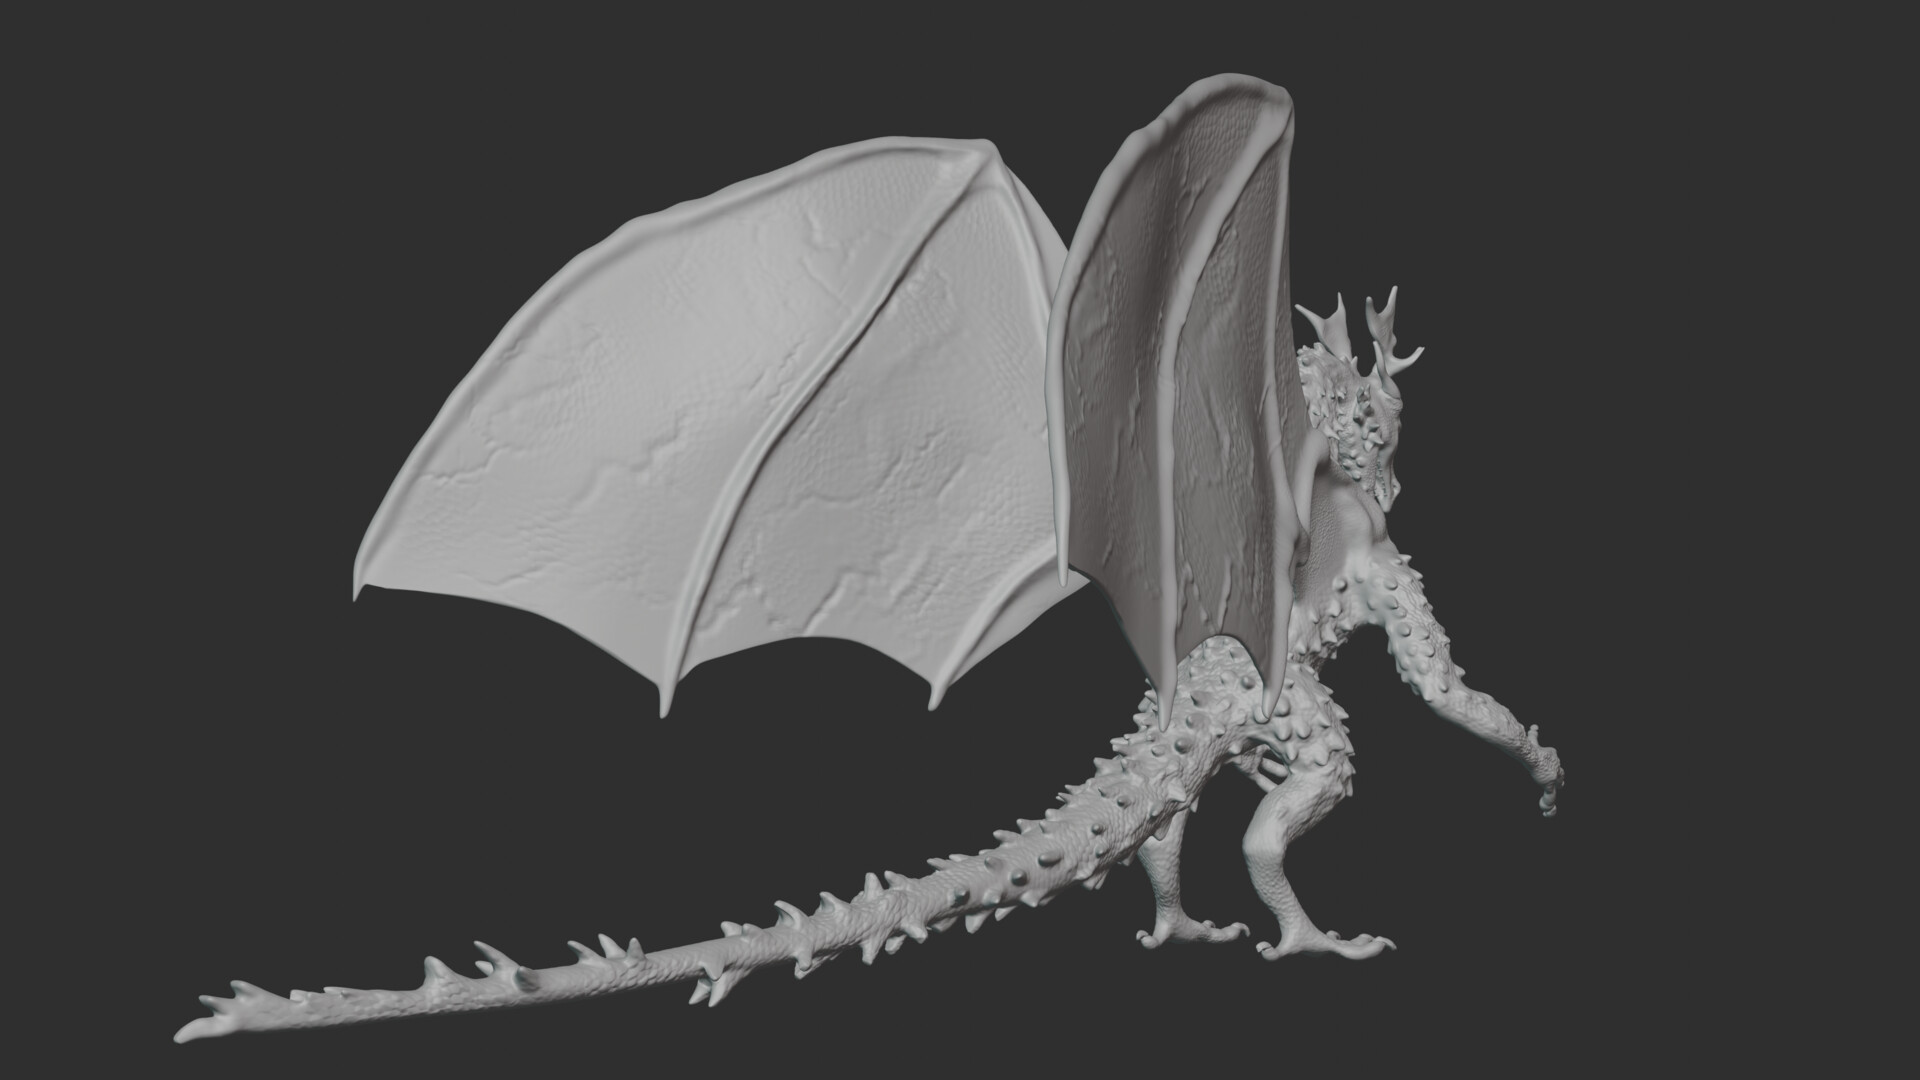 European Dragon 3D model